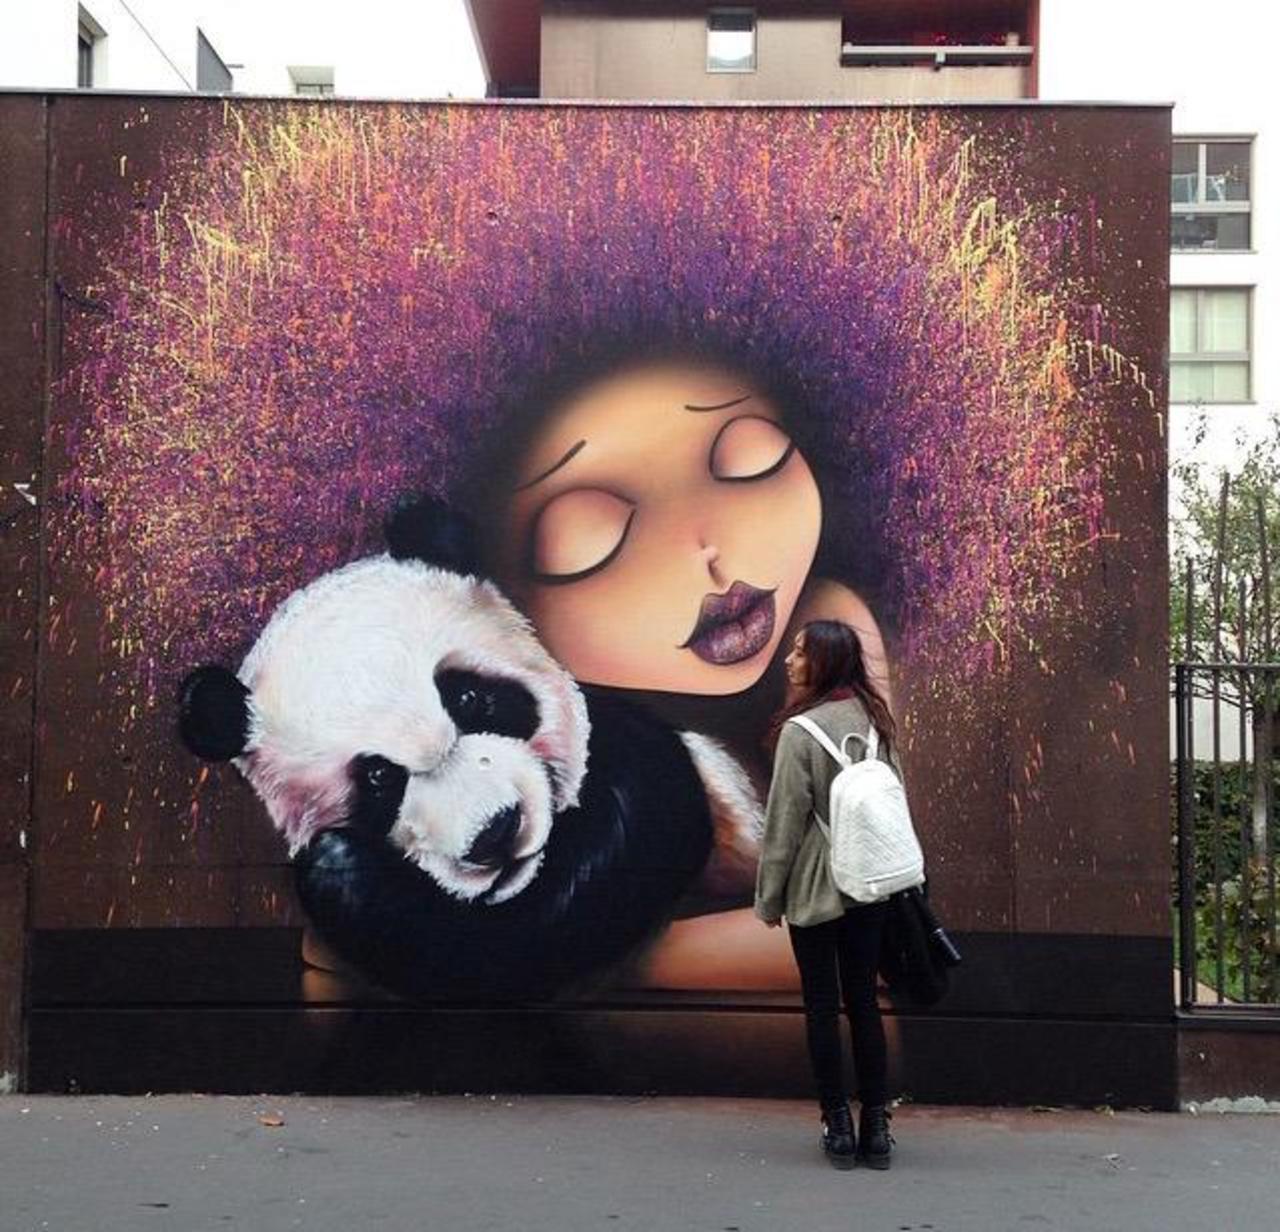 Street Art by VinieGraffiti in Paris 

#art #graffiti #mural #streetart http://t.co/FGlrRWaGpC